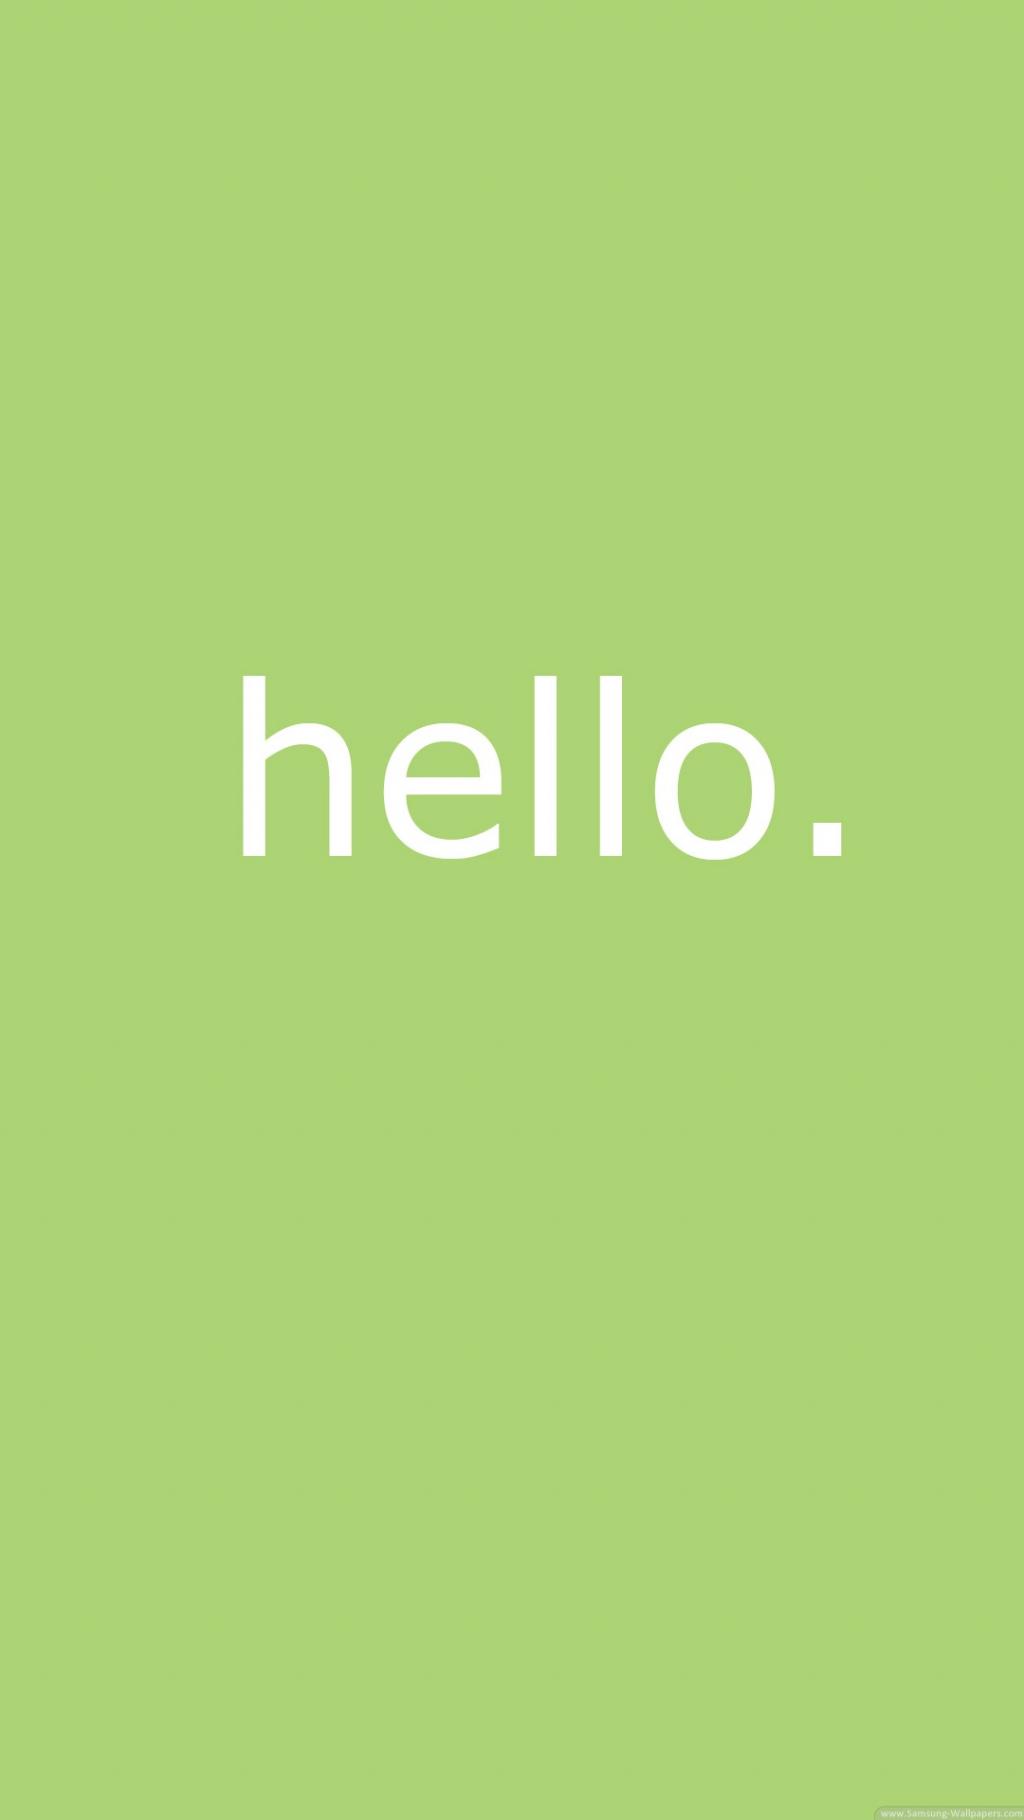 简单的Hello Message iPhone 6 Plus高清壁纸